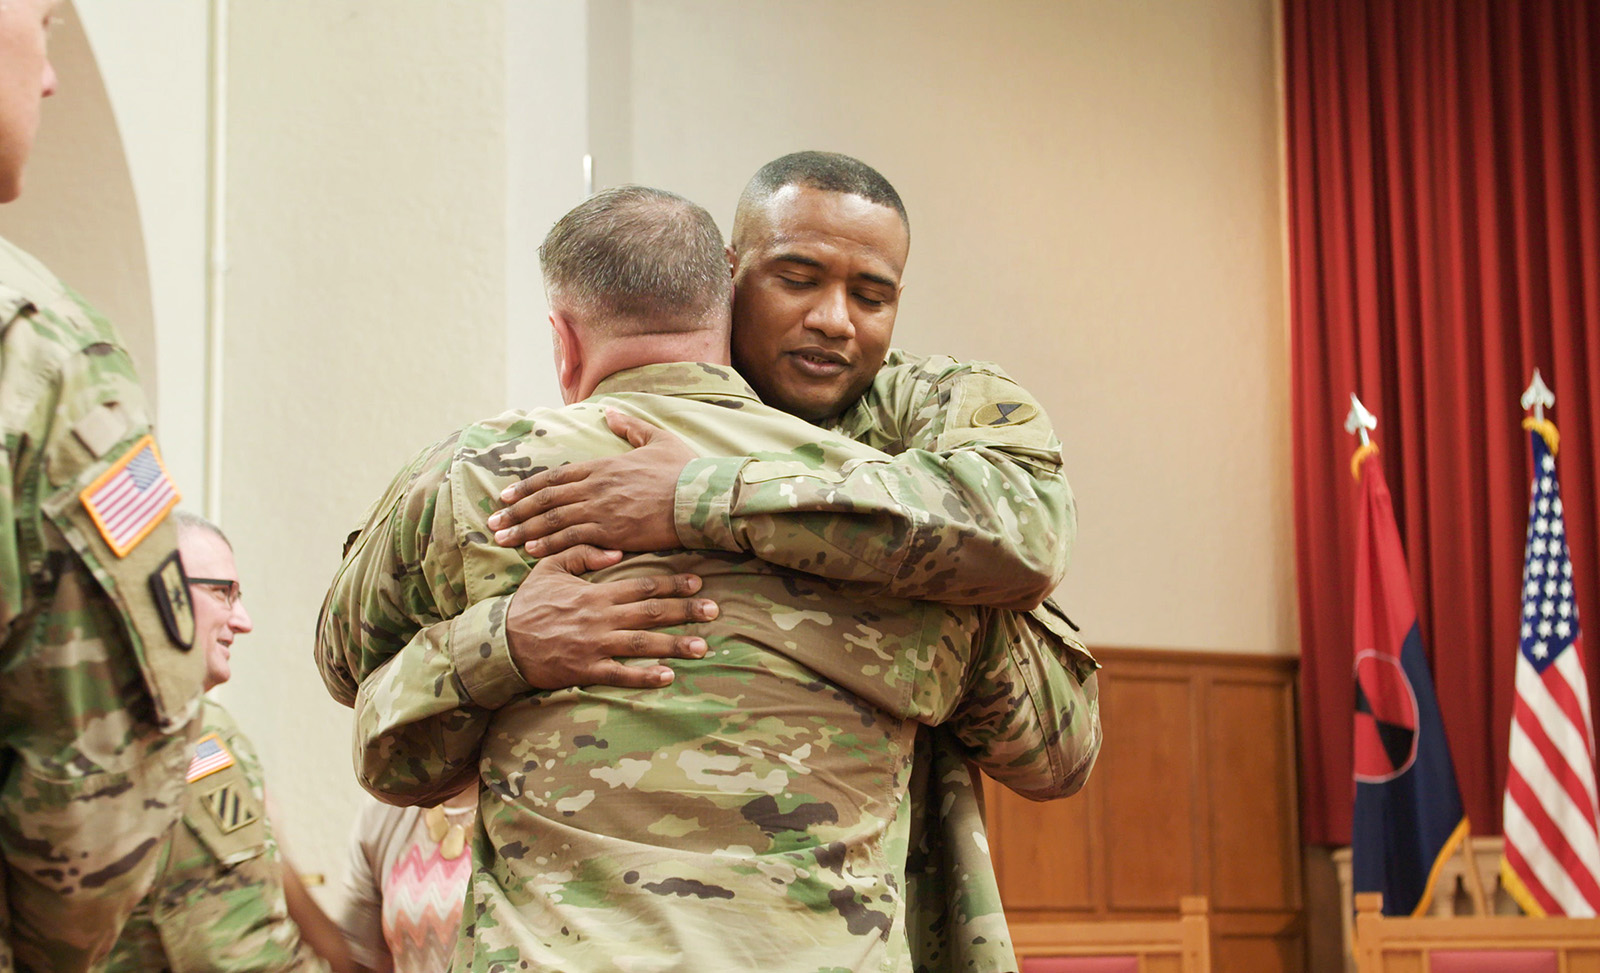 Khallid Shabazz hugs a soldier at Joint Base Lewis-McChord near Tacoma, Washington. (Photo by David Washburn)